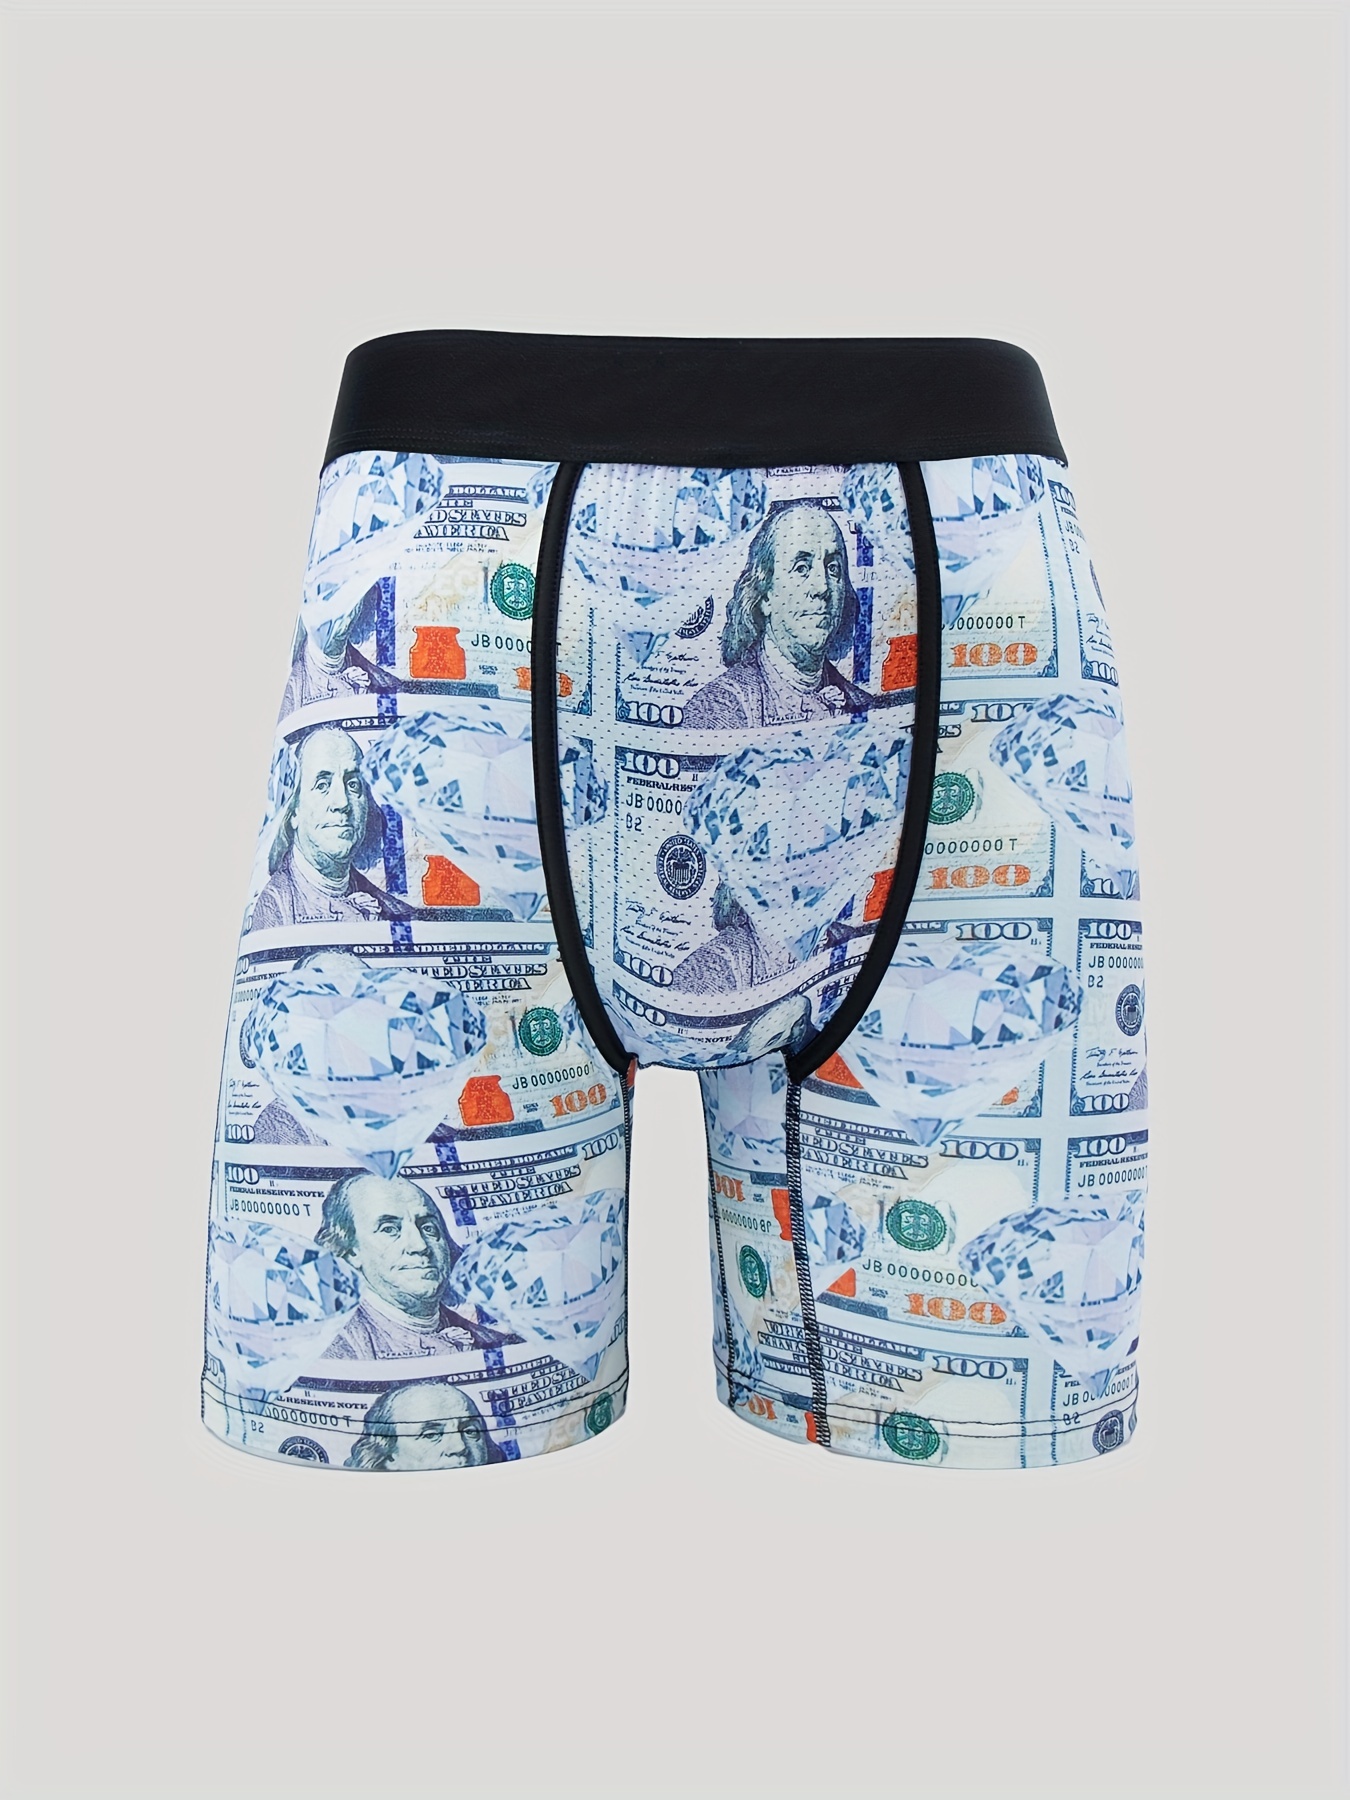 PSD Men's E - Money Pyramid Boxer Brief Underwear,Medium